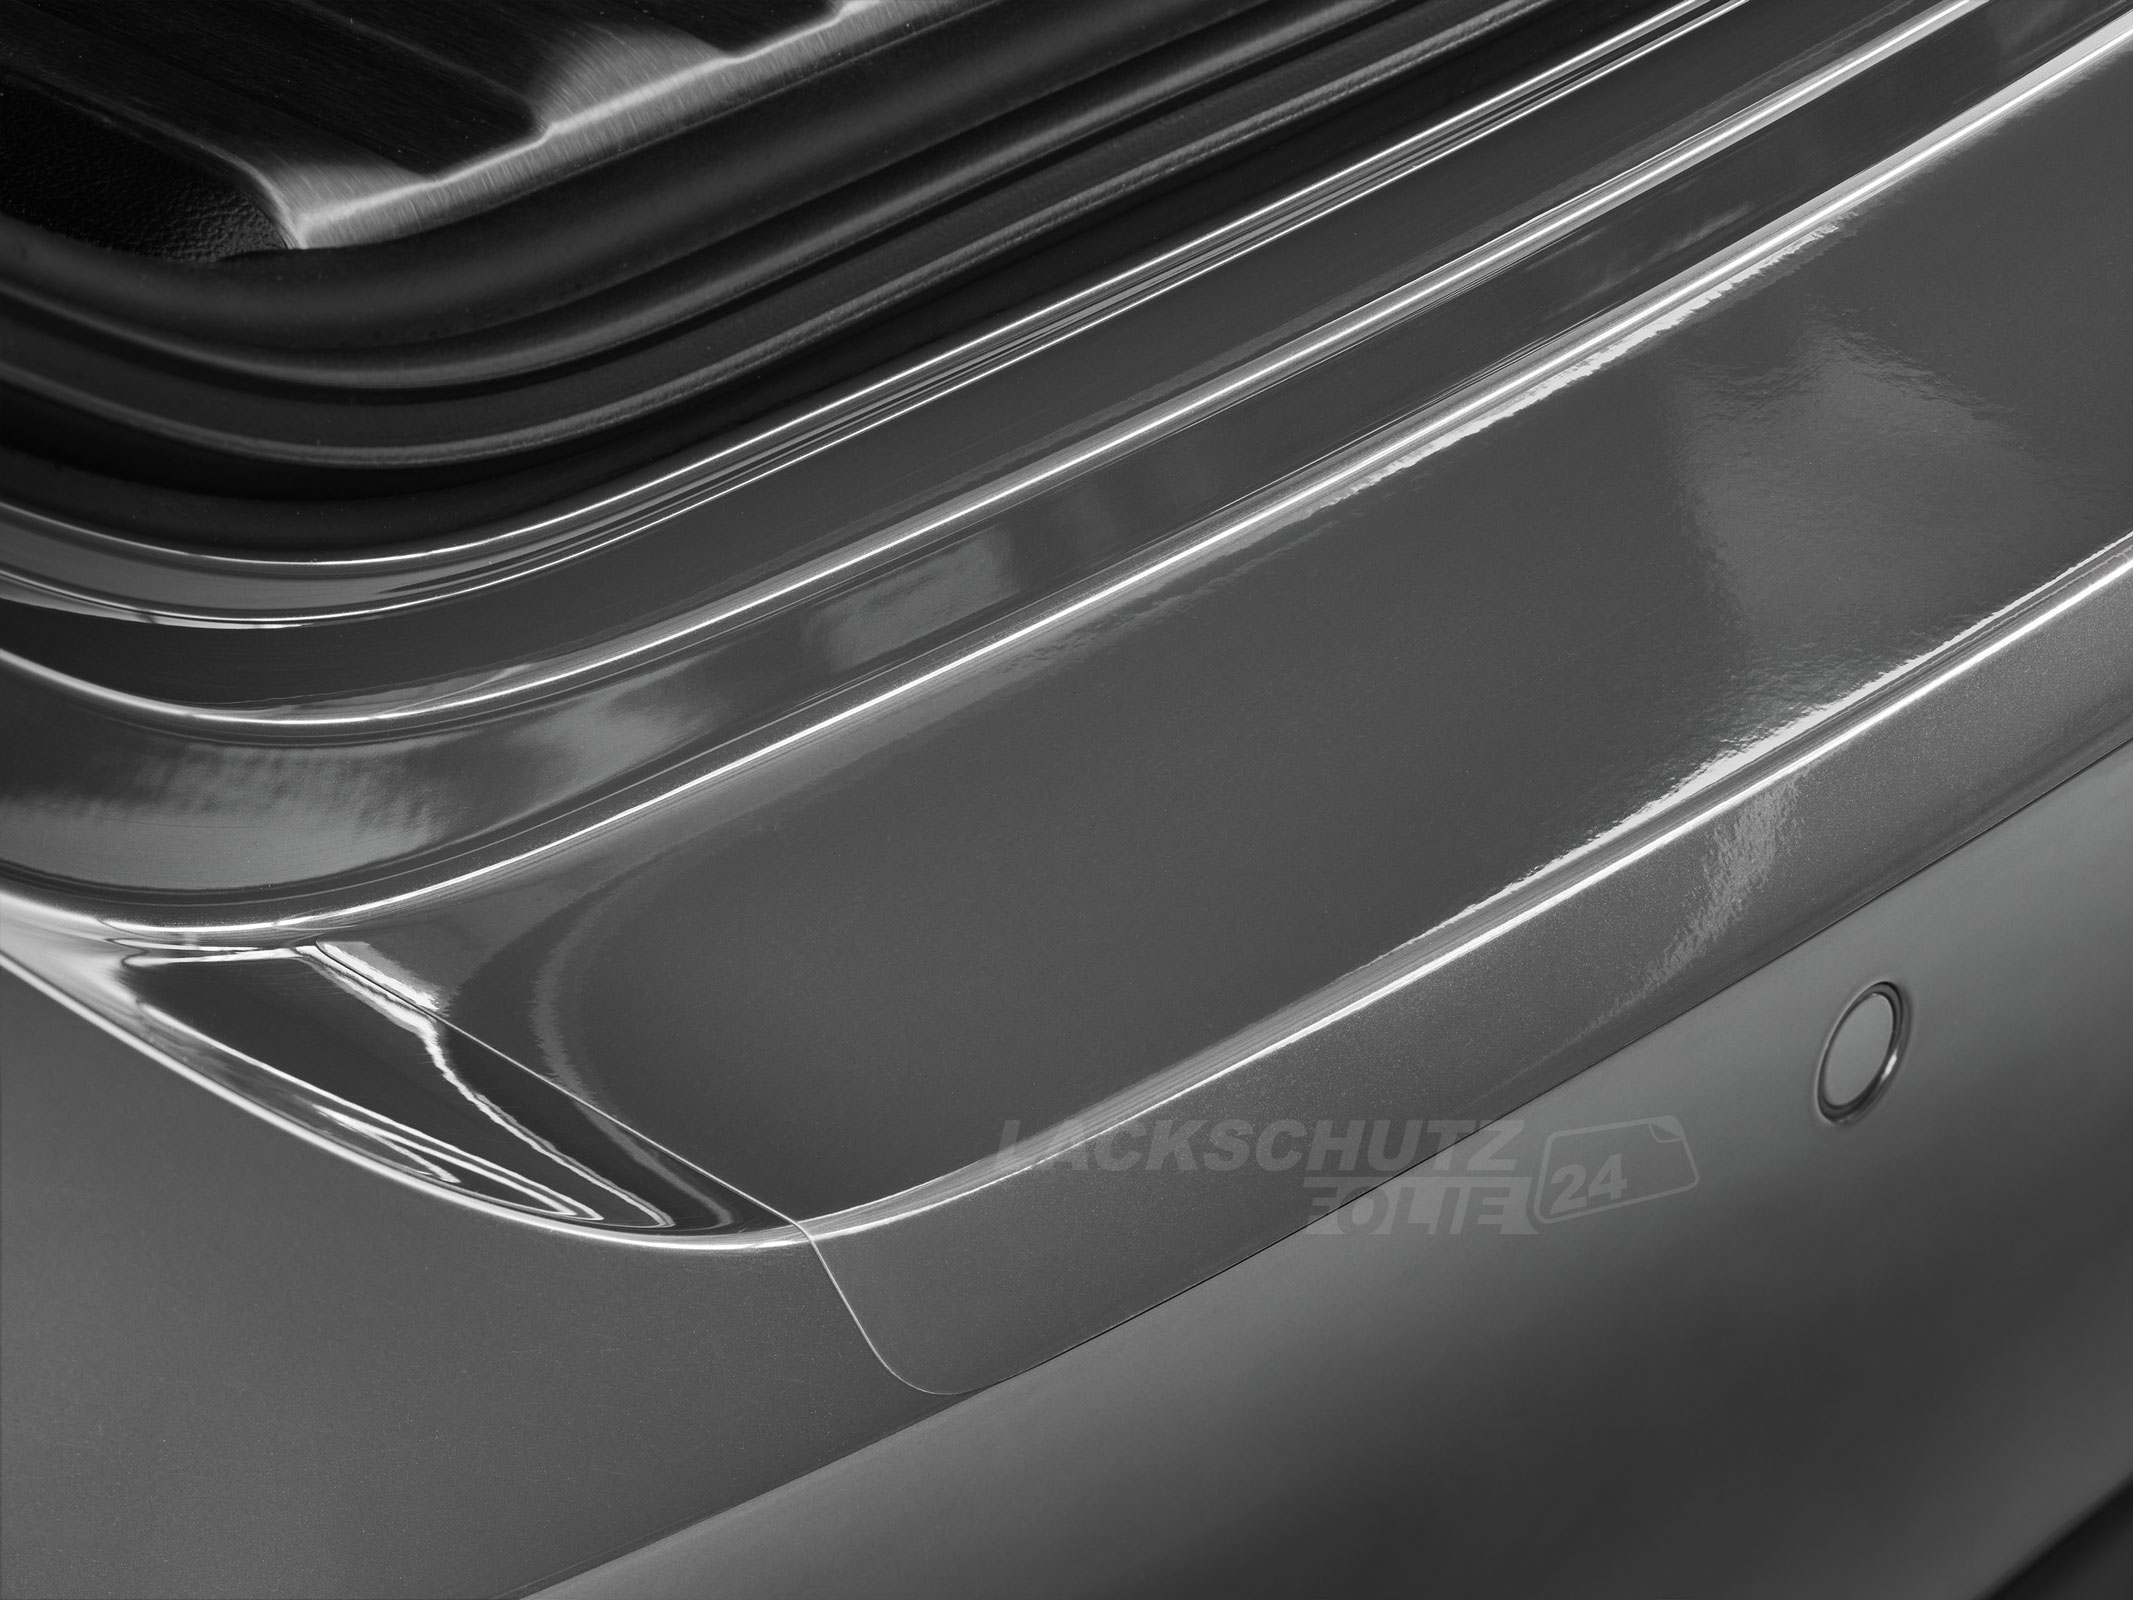 Ladekantenschutzfolie - Transparent Glatt Hochglänzend 240 µm stark für Audi A1 Sportback Typ 8X, BJ 02/2012-07/2018